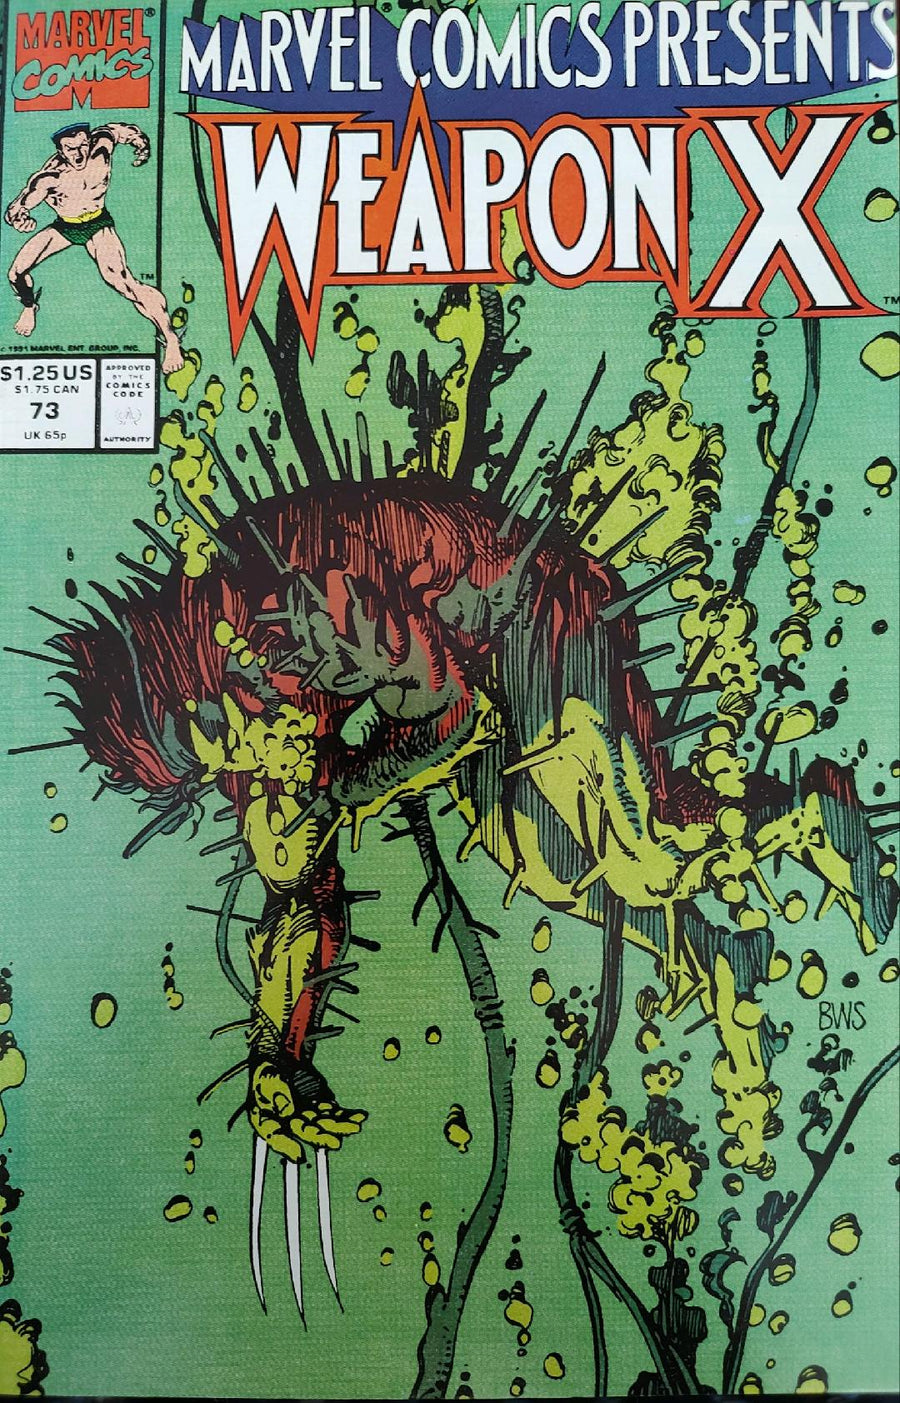 Marvel Comics Presents #73 Weapon X Comic Book Cover